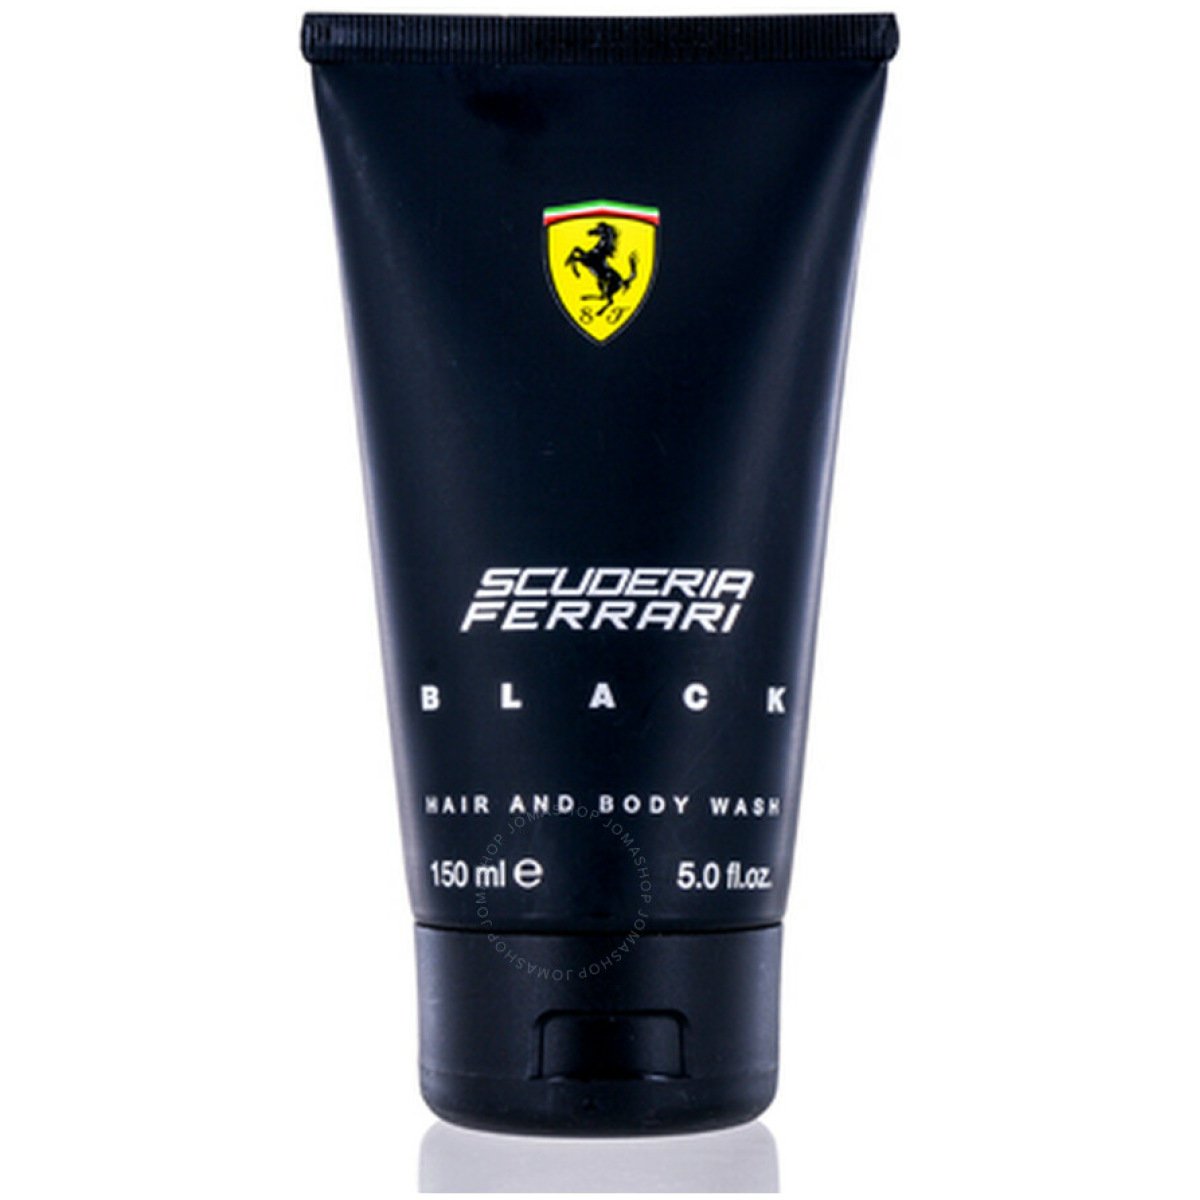 FERRARI Scuderia Black Hair & Body Wash 150ml